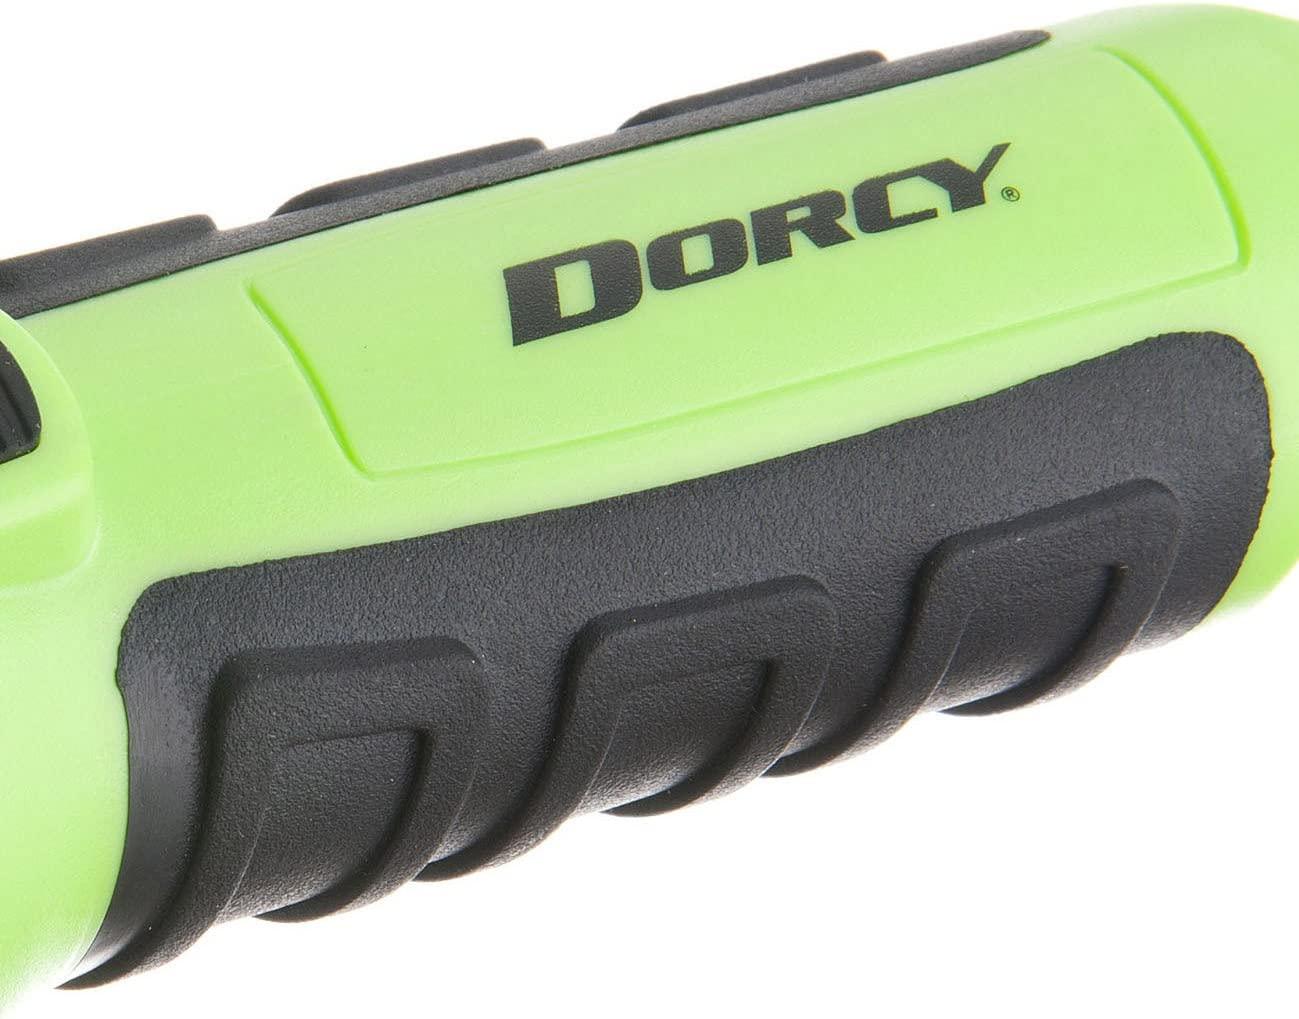 Dorcy Glow in the Dark LED Flashlight